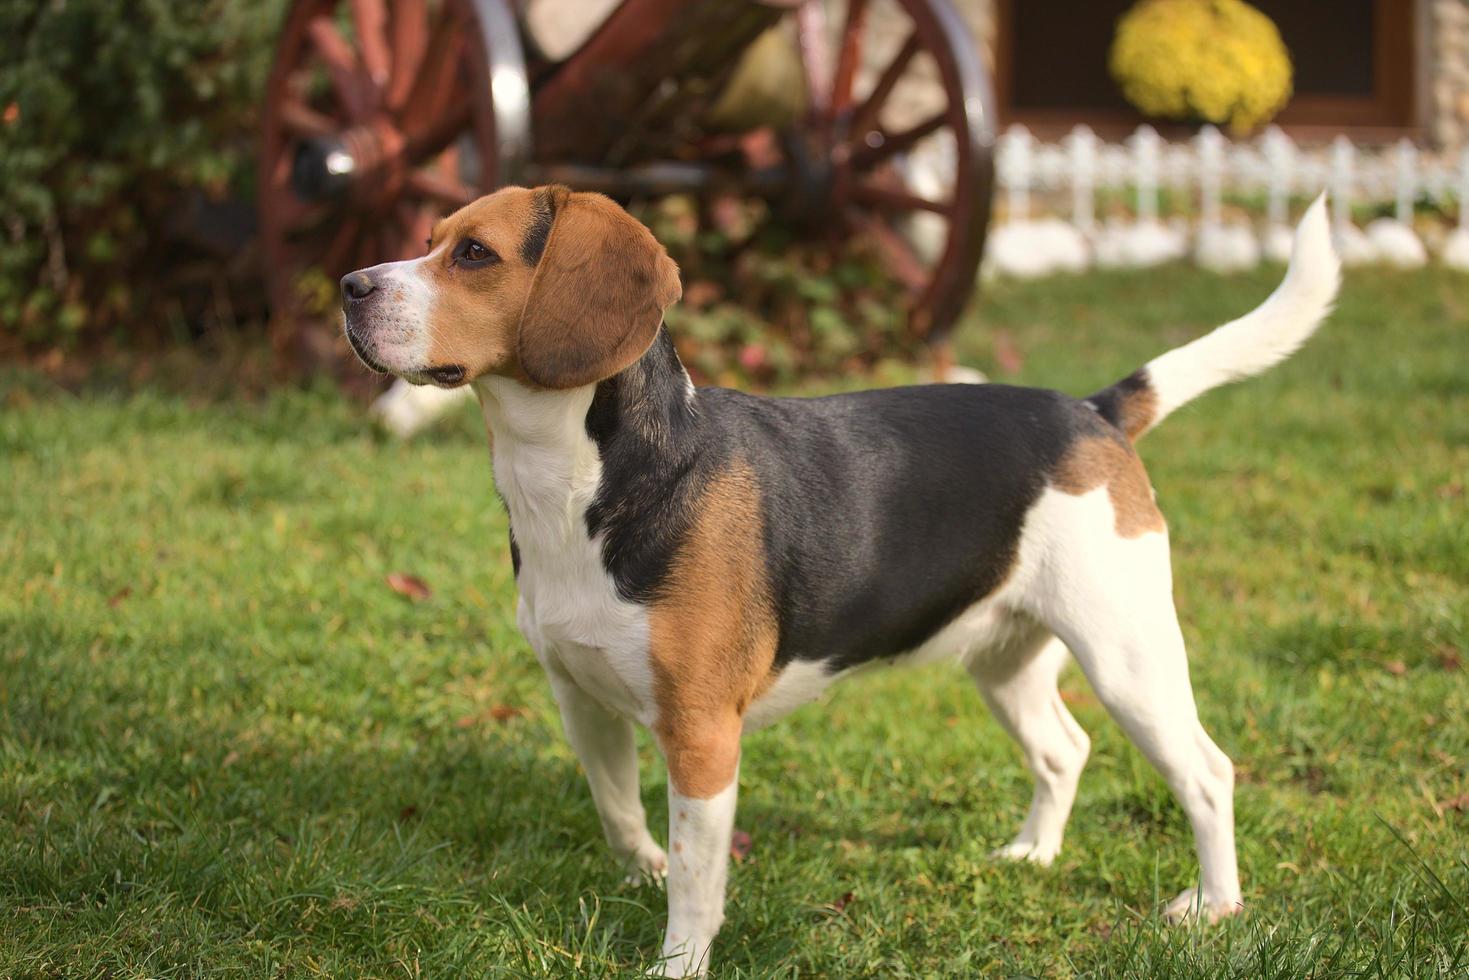 Sweet lady Beagle photo